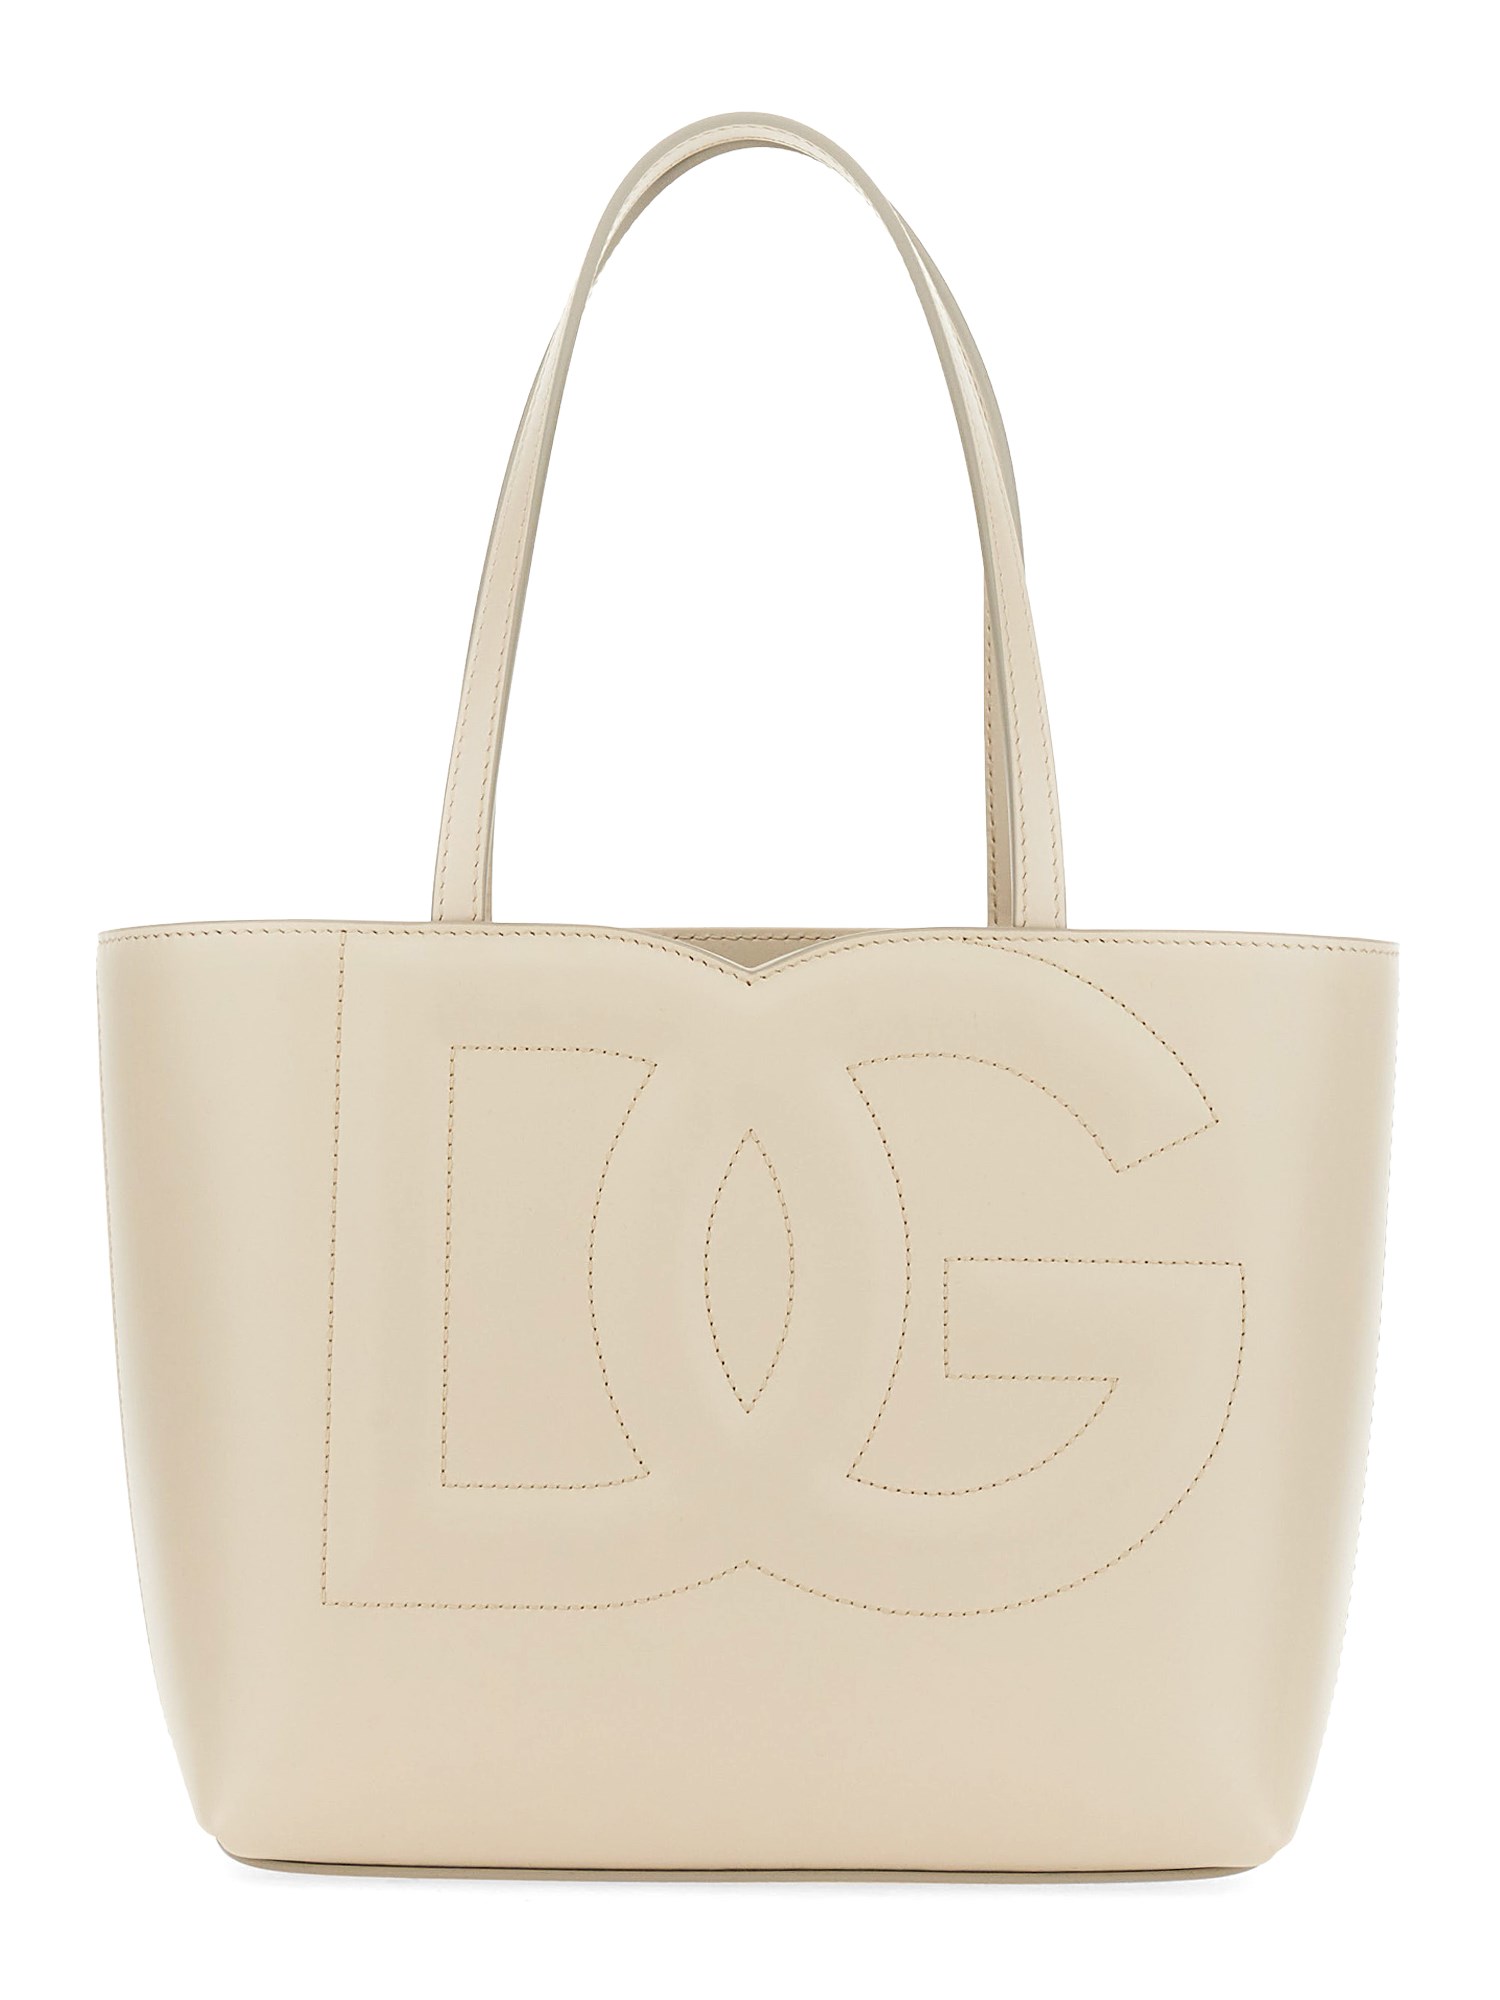 dolce & gabbana small shopping bag with logo